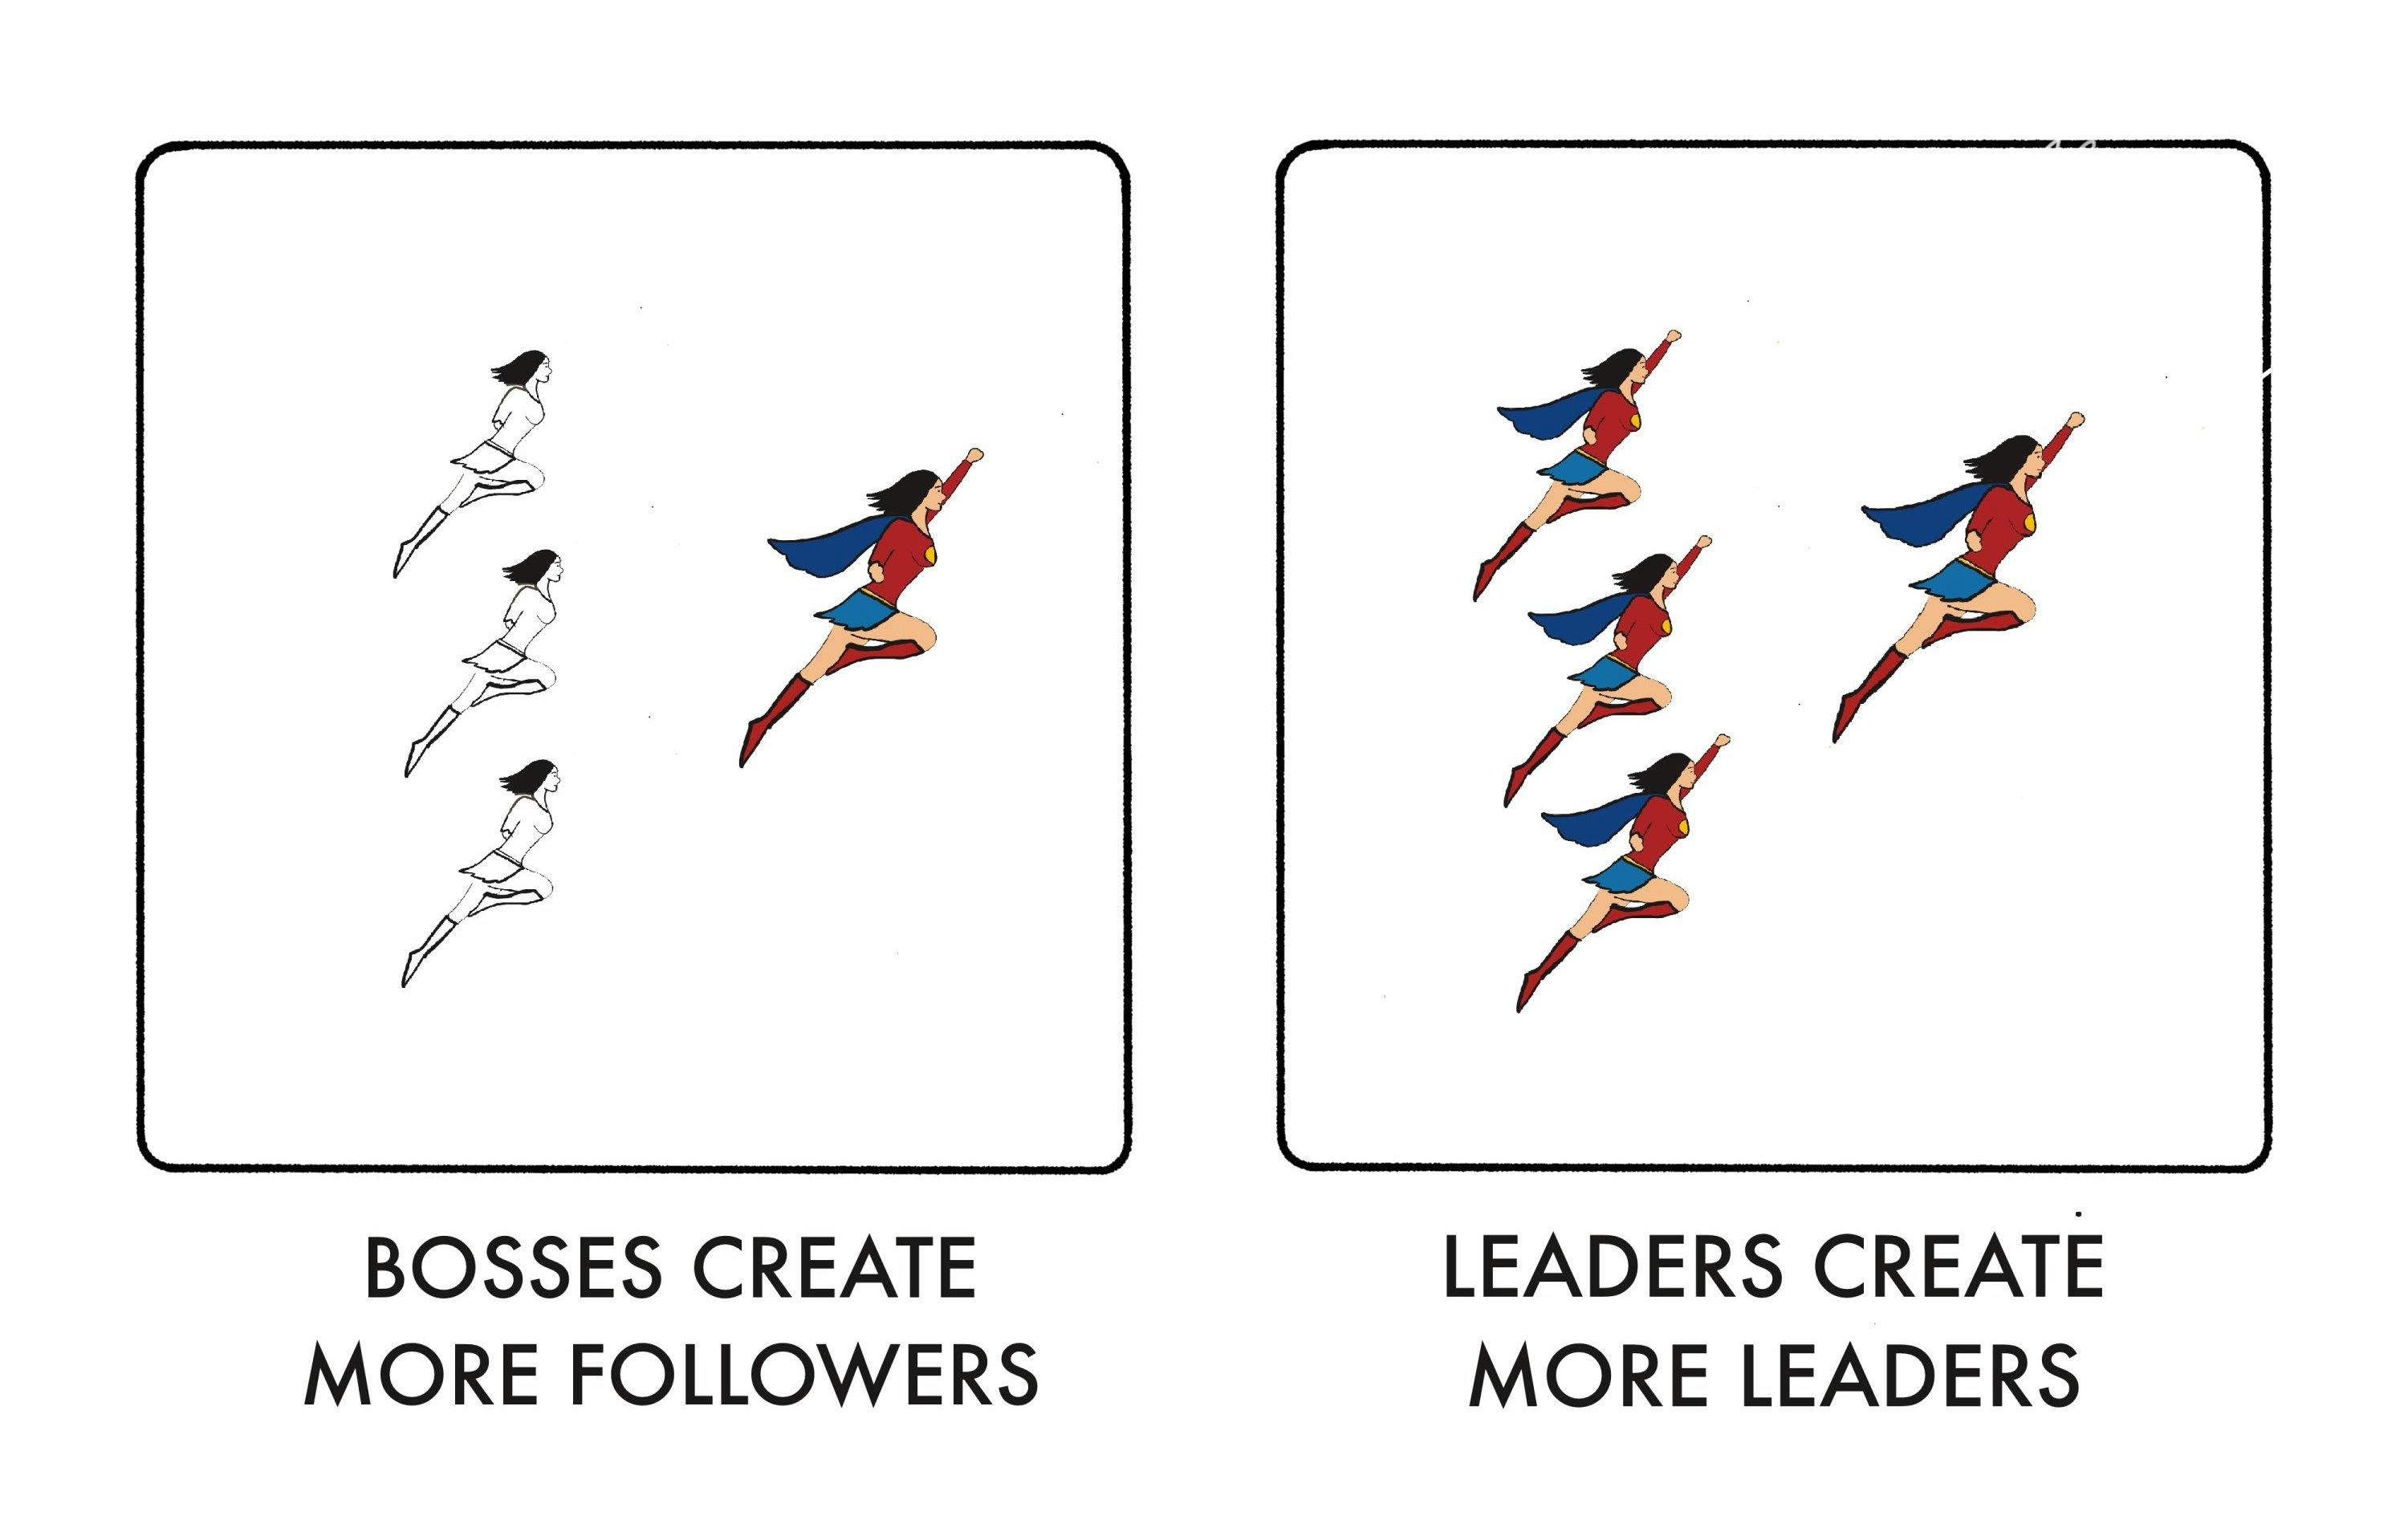 Bosses create followers, leaders create more leaders